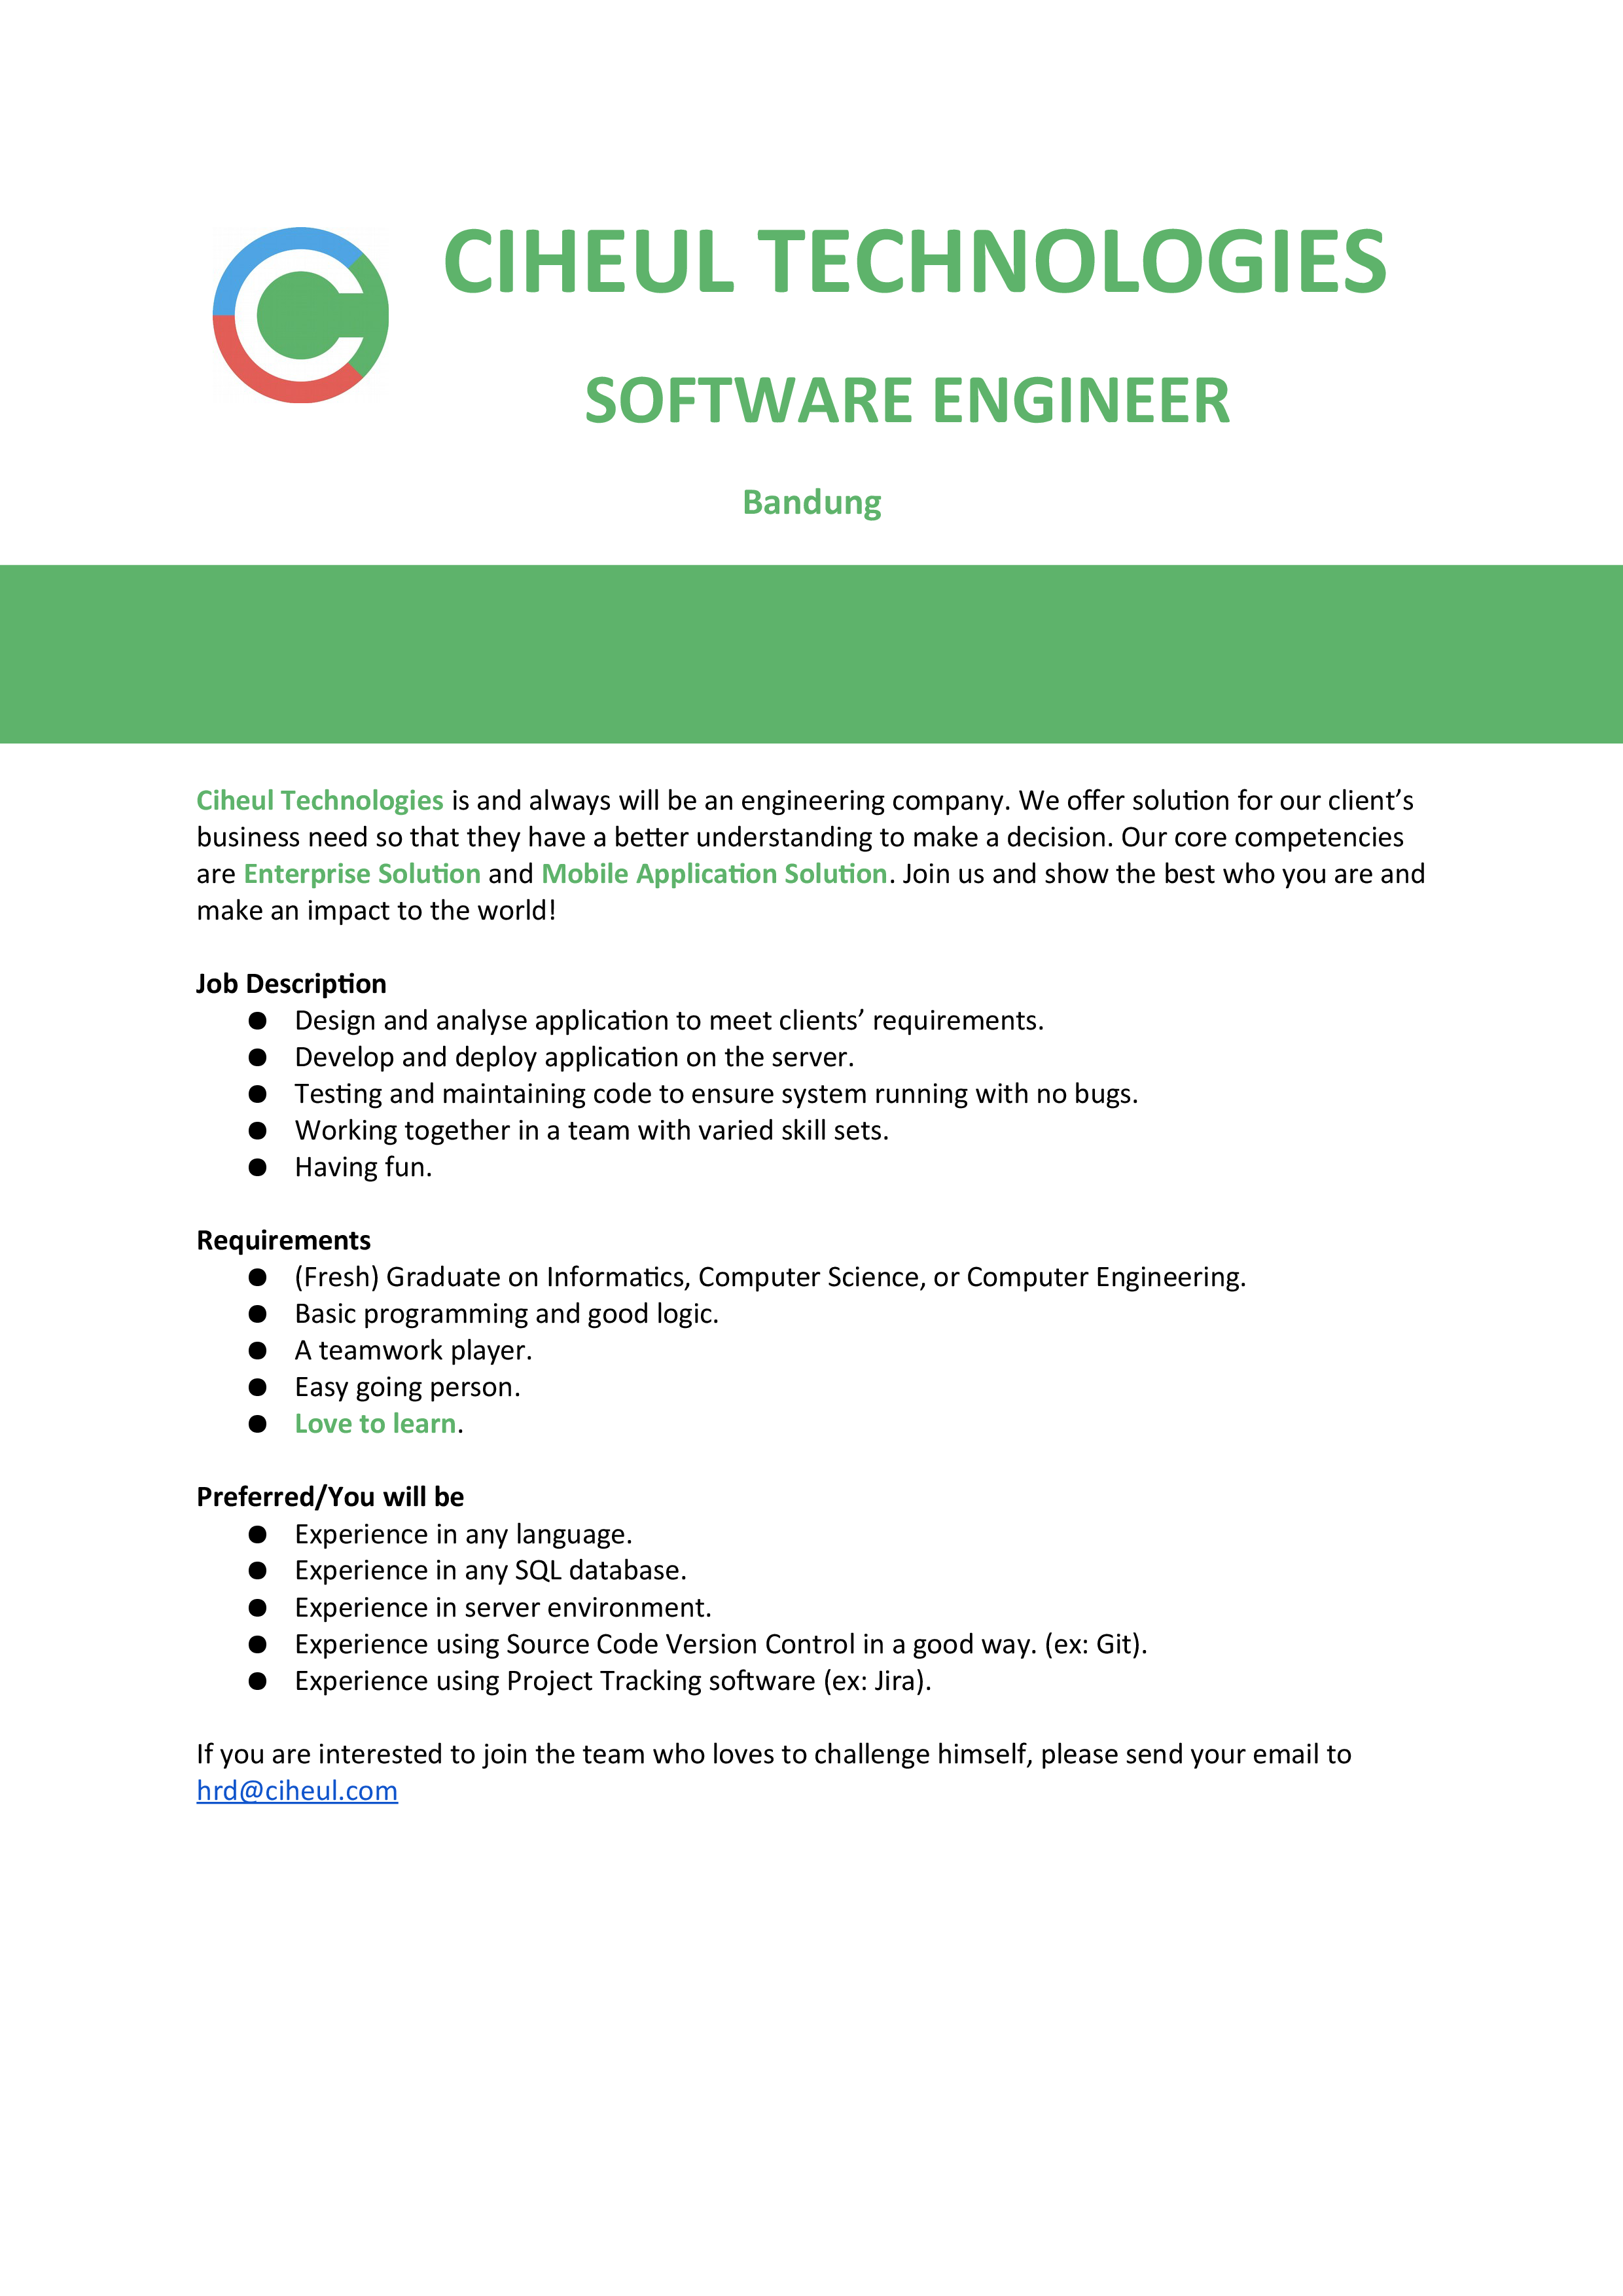 ciheul-technologies-softwarengineer-page-0.png